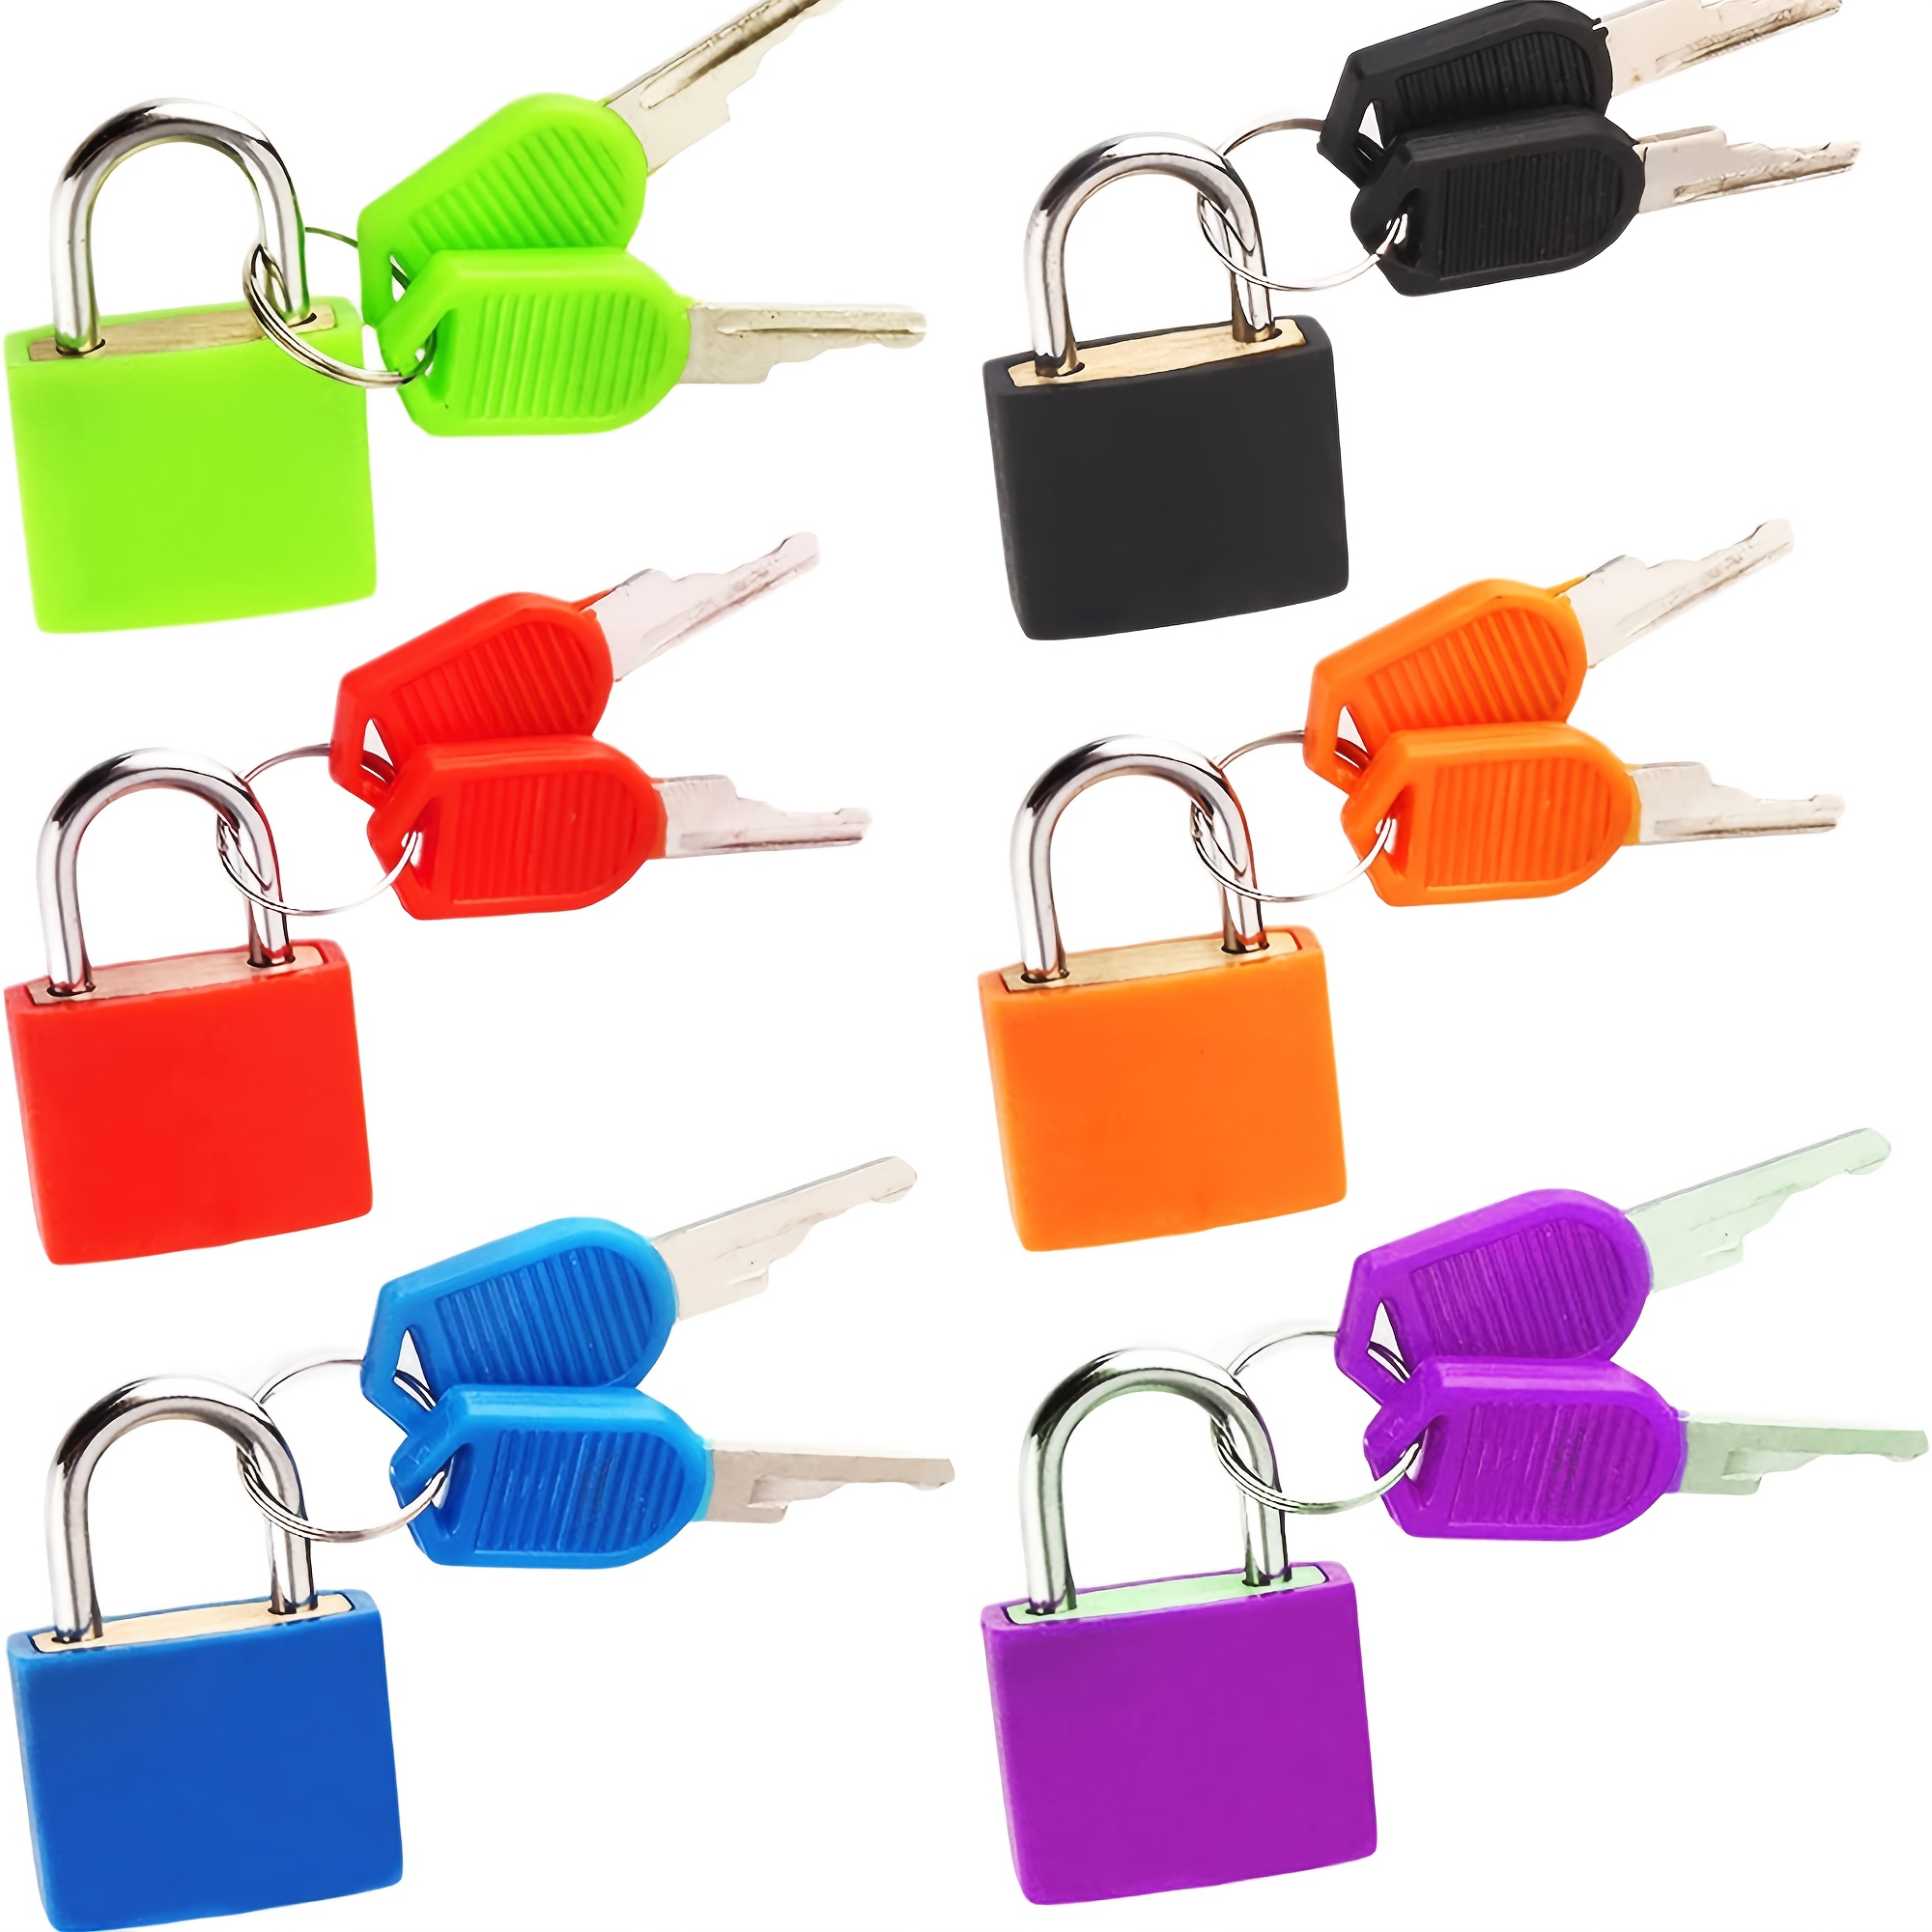 Litoexpe 10 Pcs Suitcase Locks with Keys, Small Luggage Locks